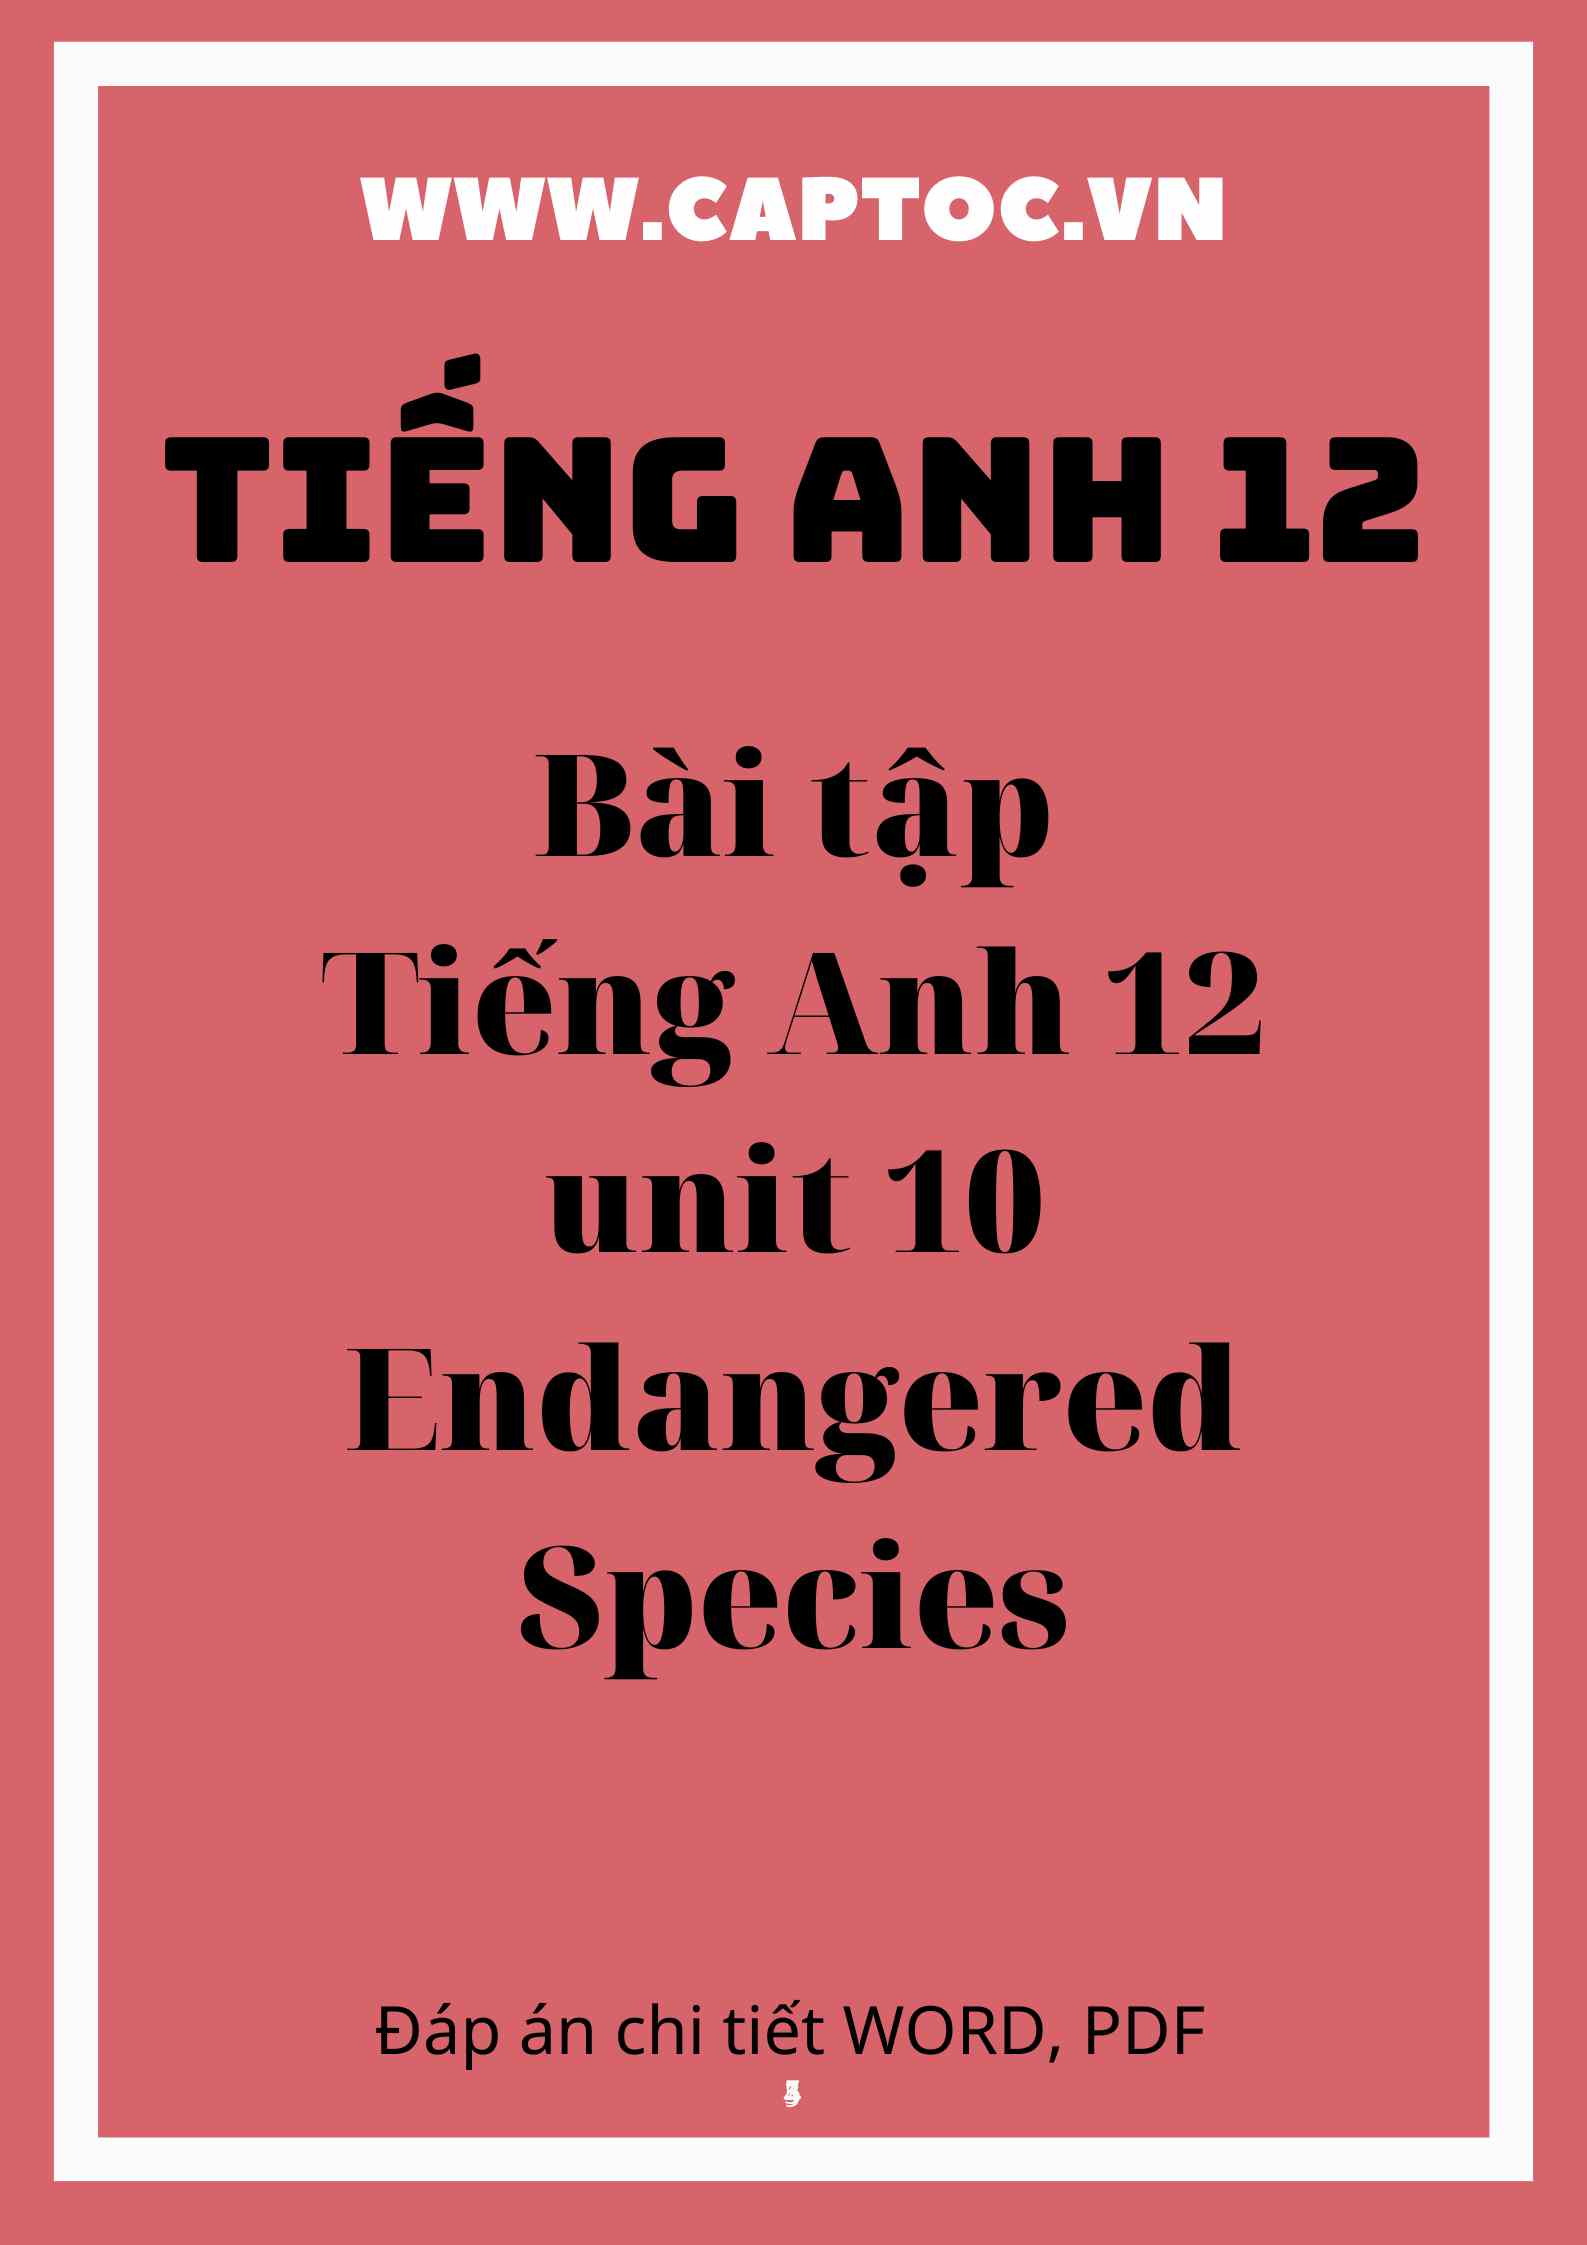 Bài tập Tiếng Anh 12 unit 10 Endangered Species